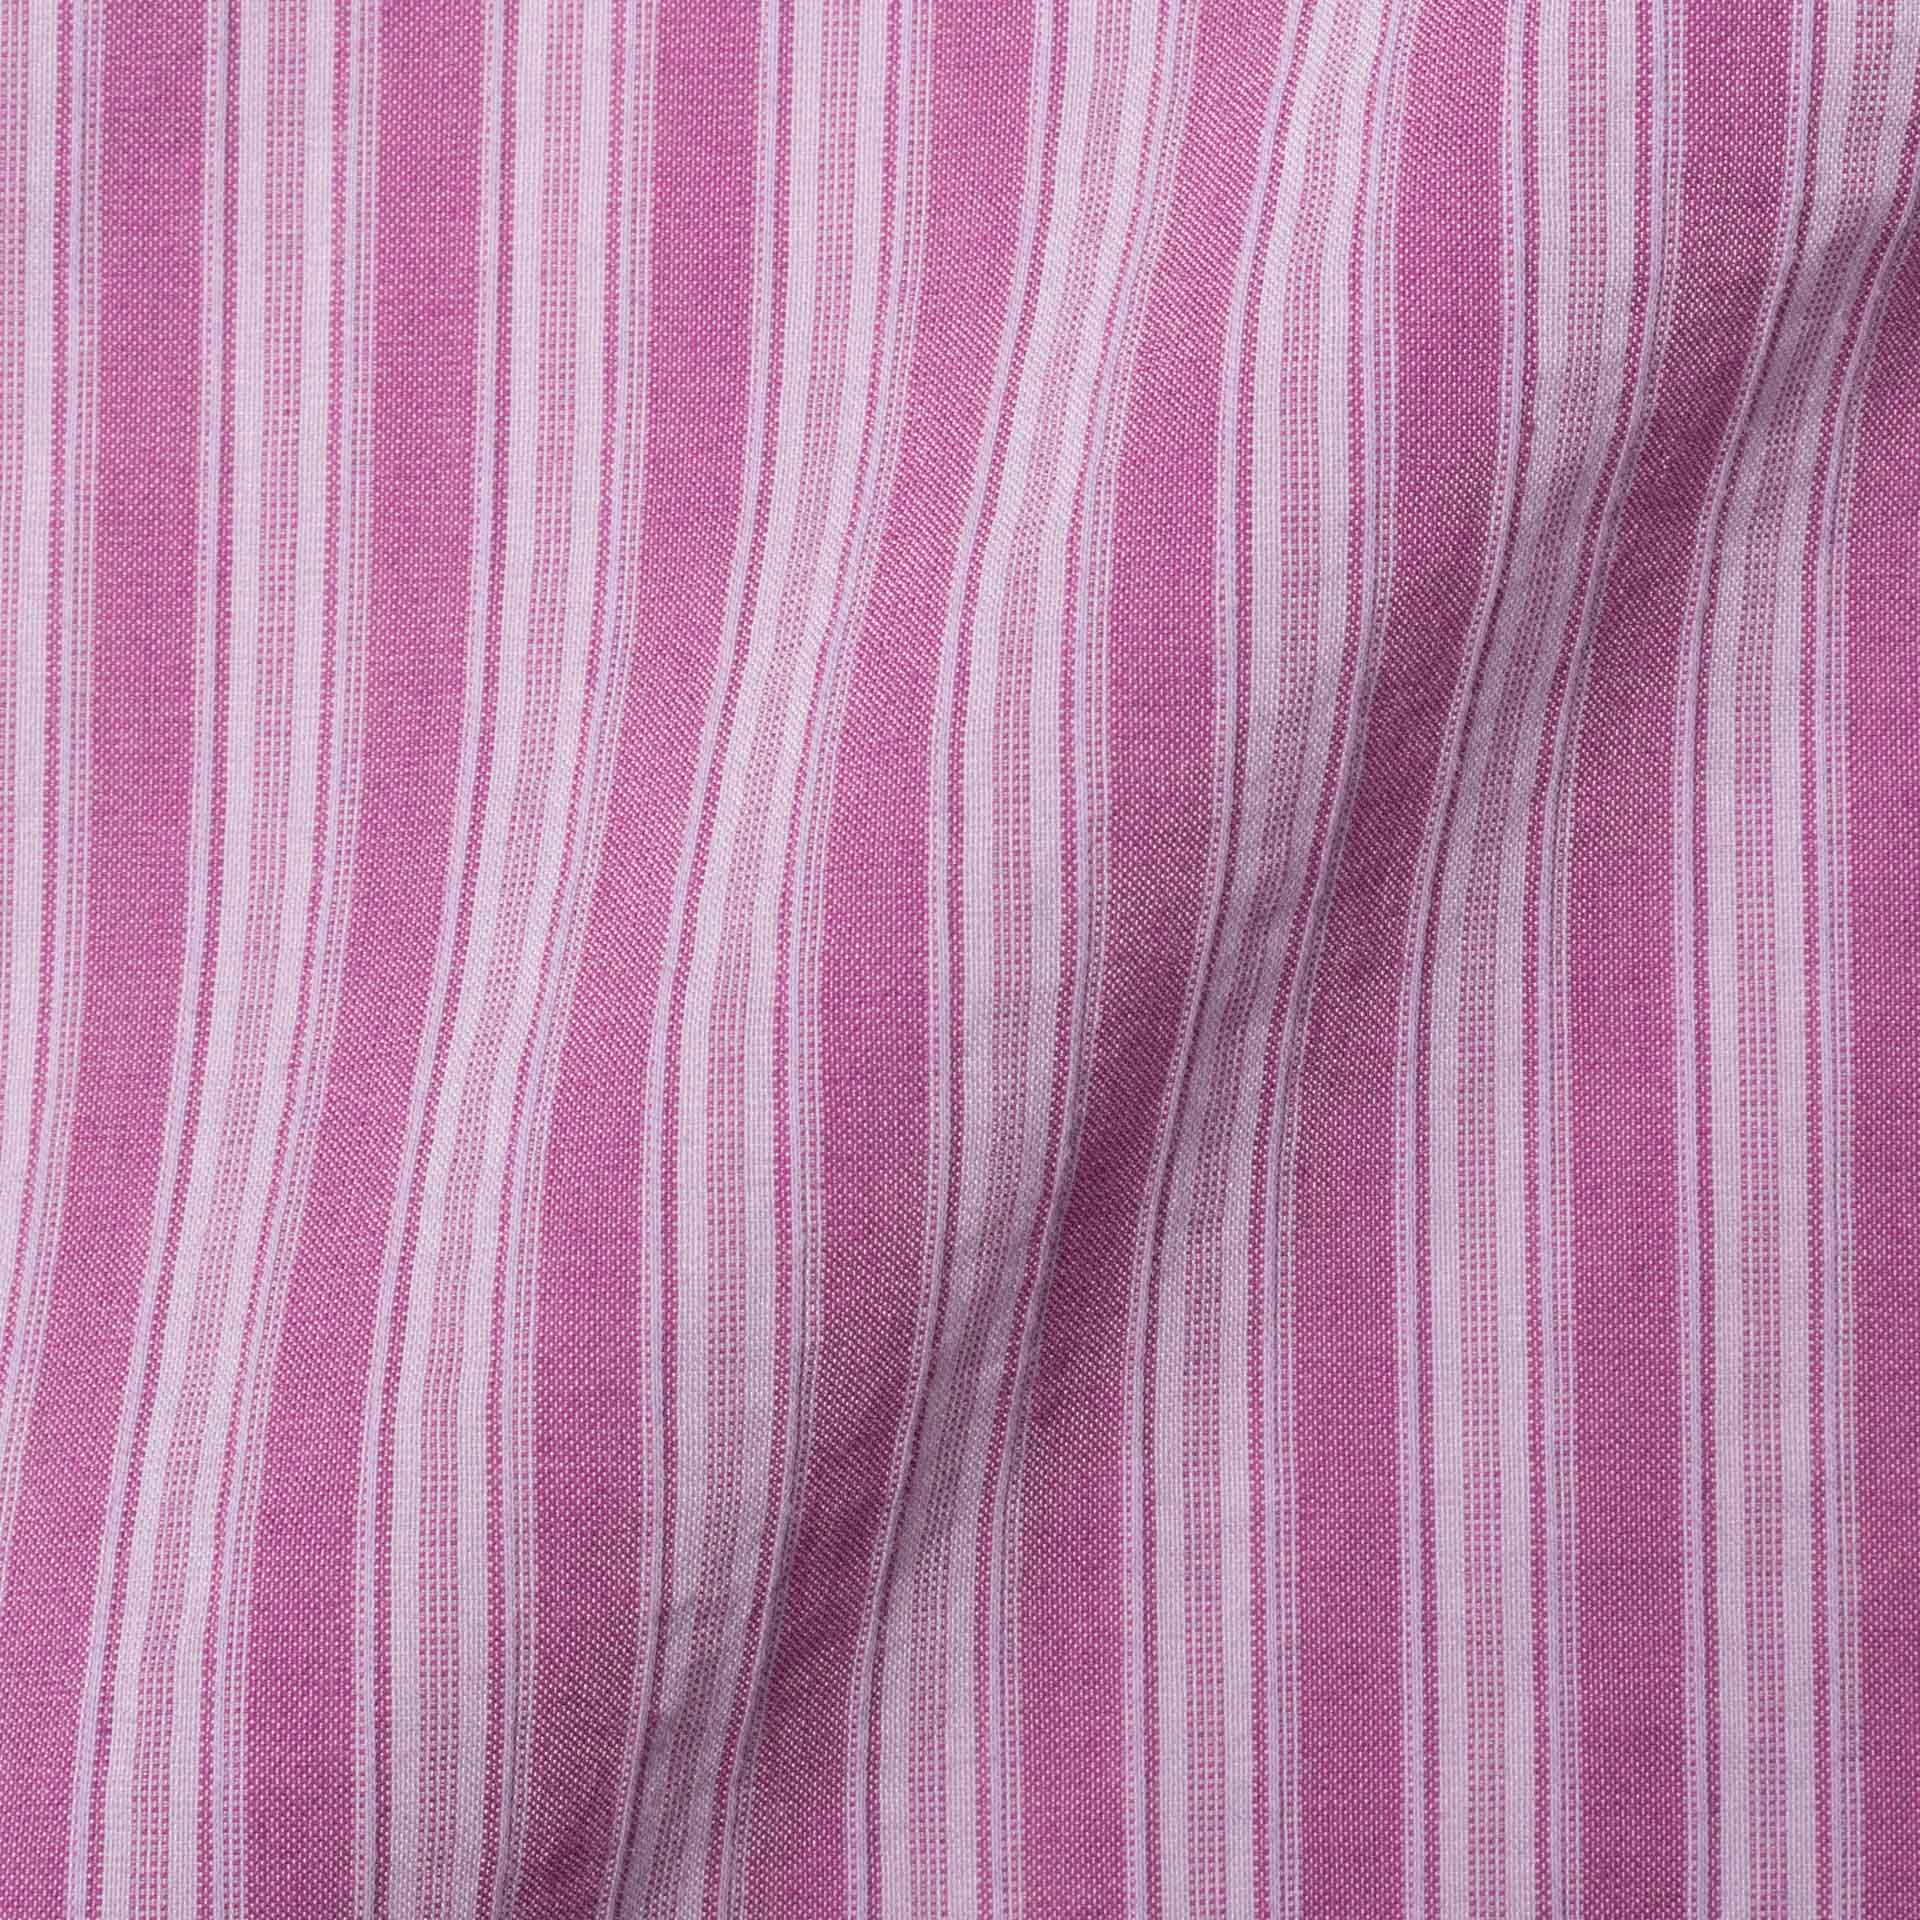 JAY KOS New York Mallow Striped Cotton-Silk Shirt EU 42 US 16.5 JAY KOS